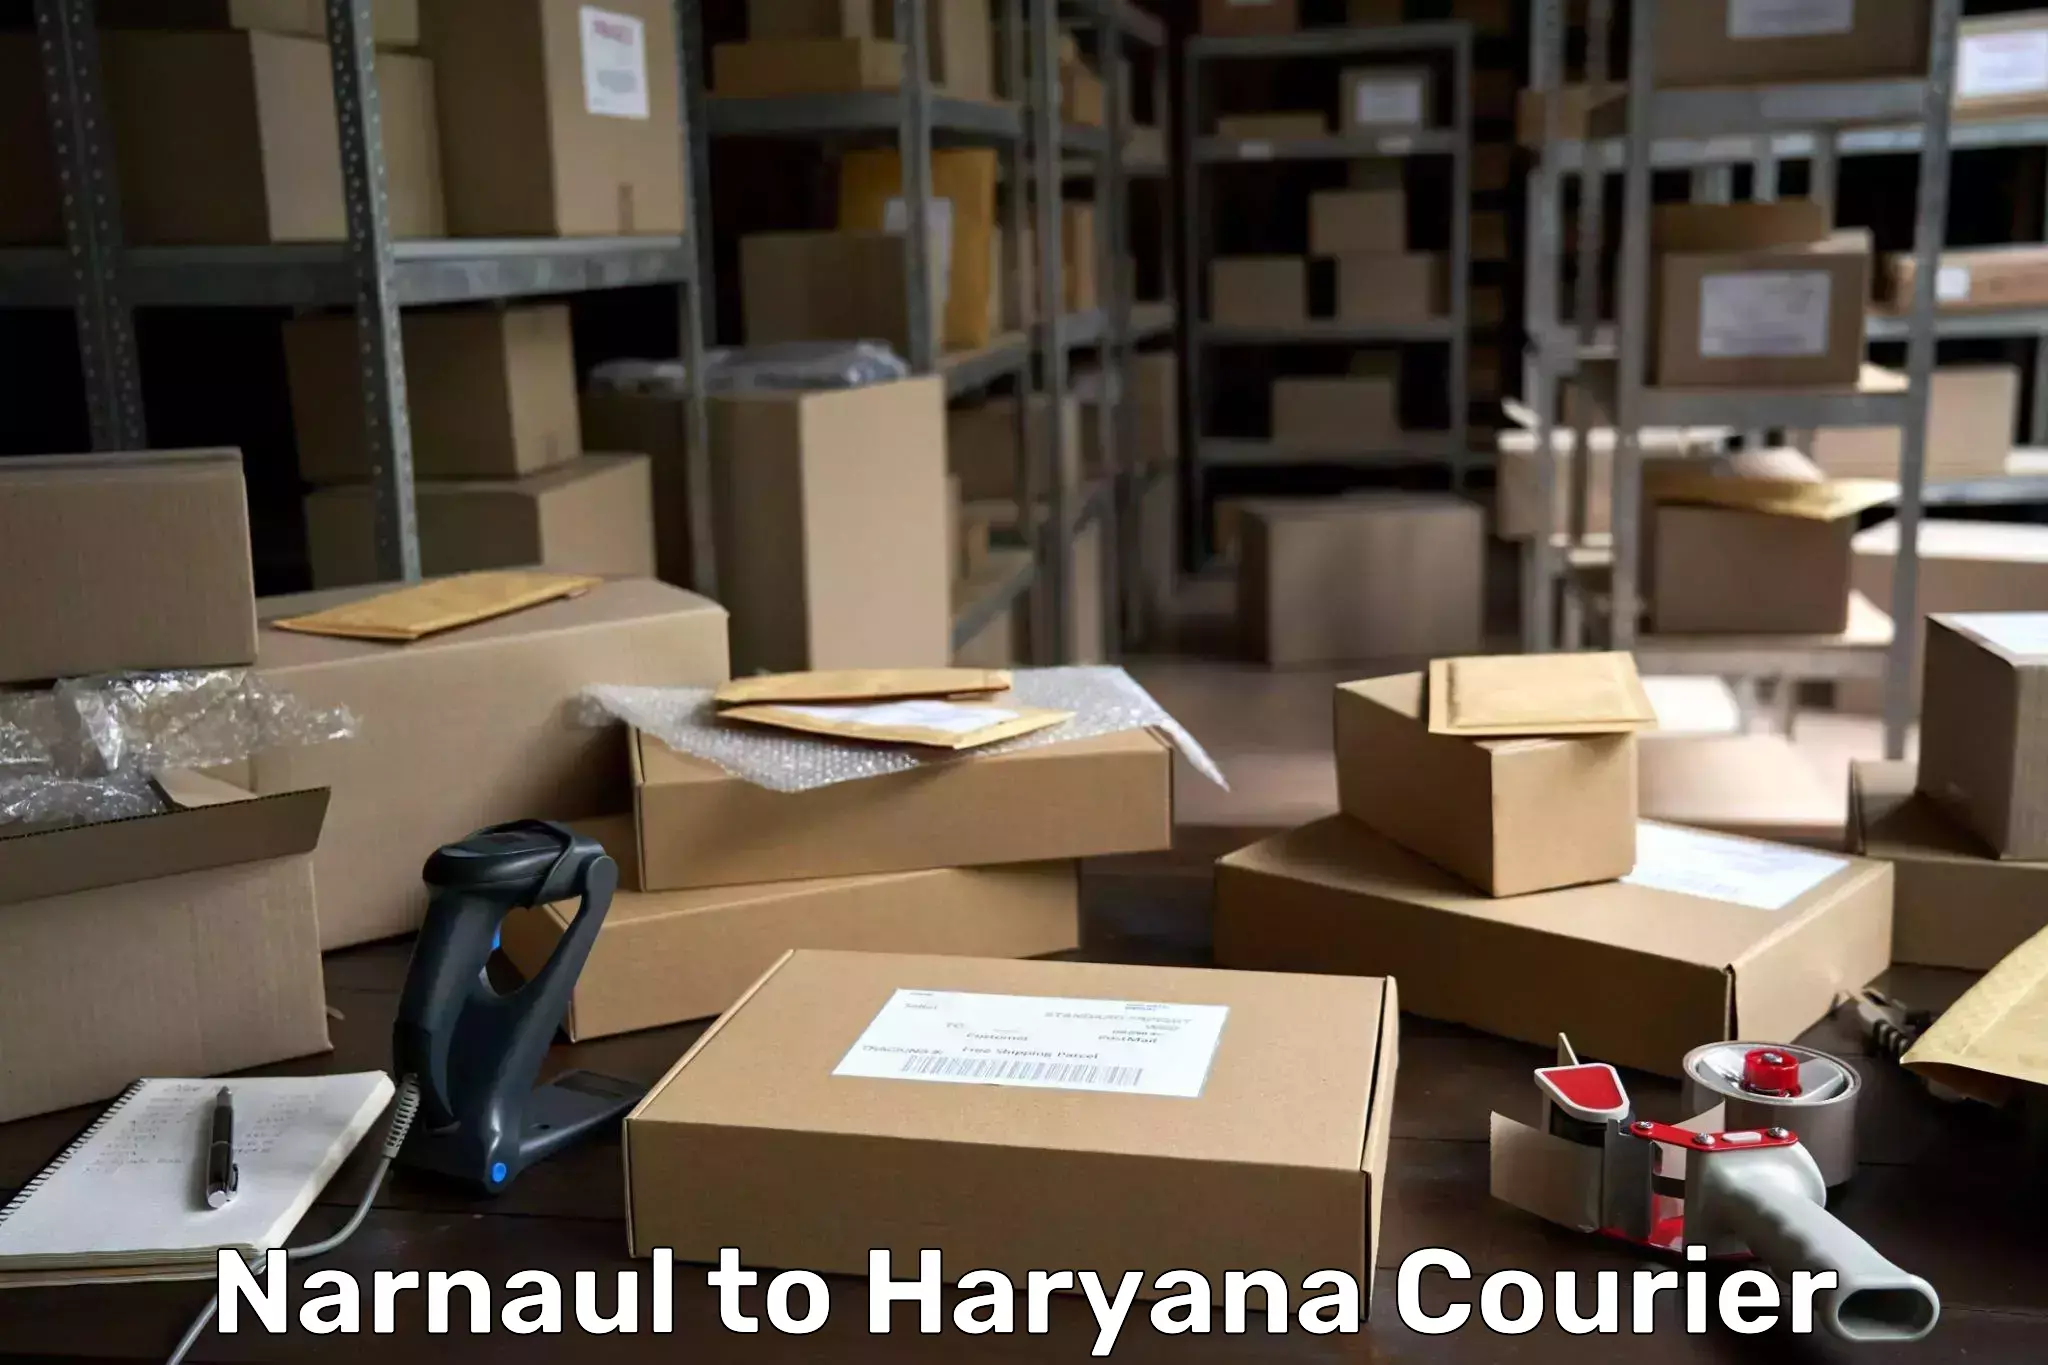 Urgent courier needs Narnaul to Charkhi Dadri